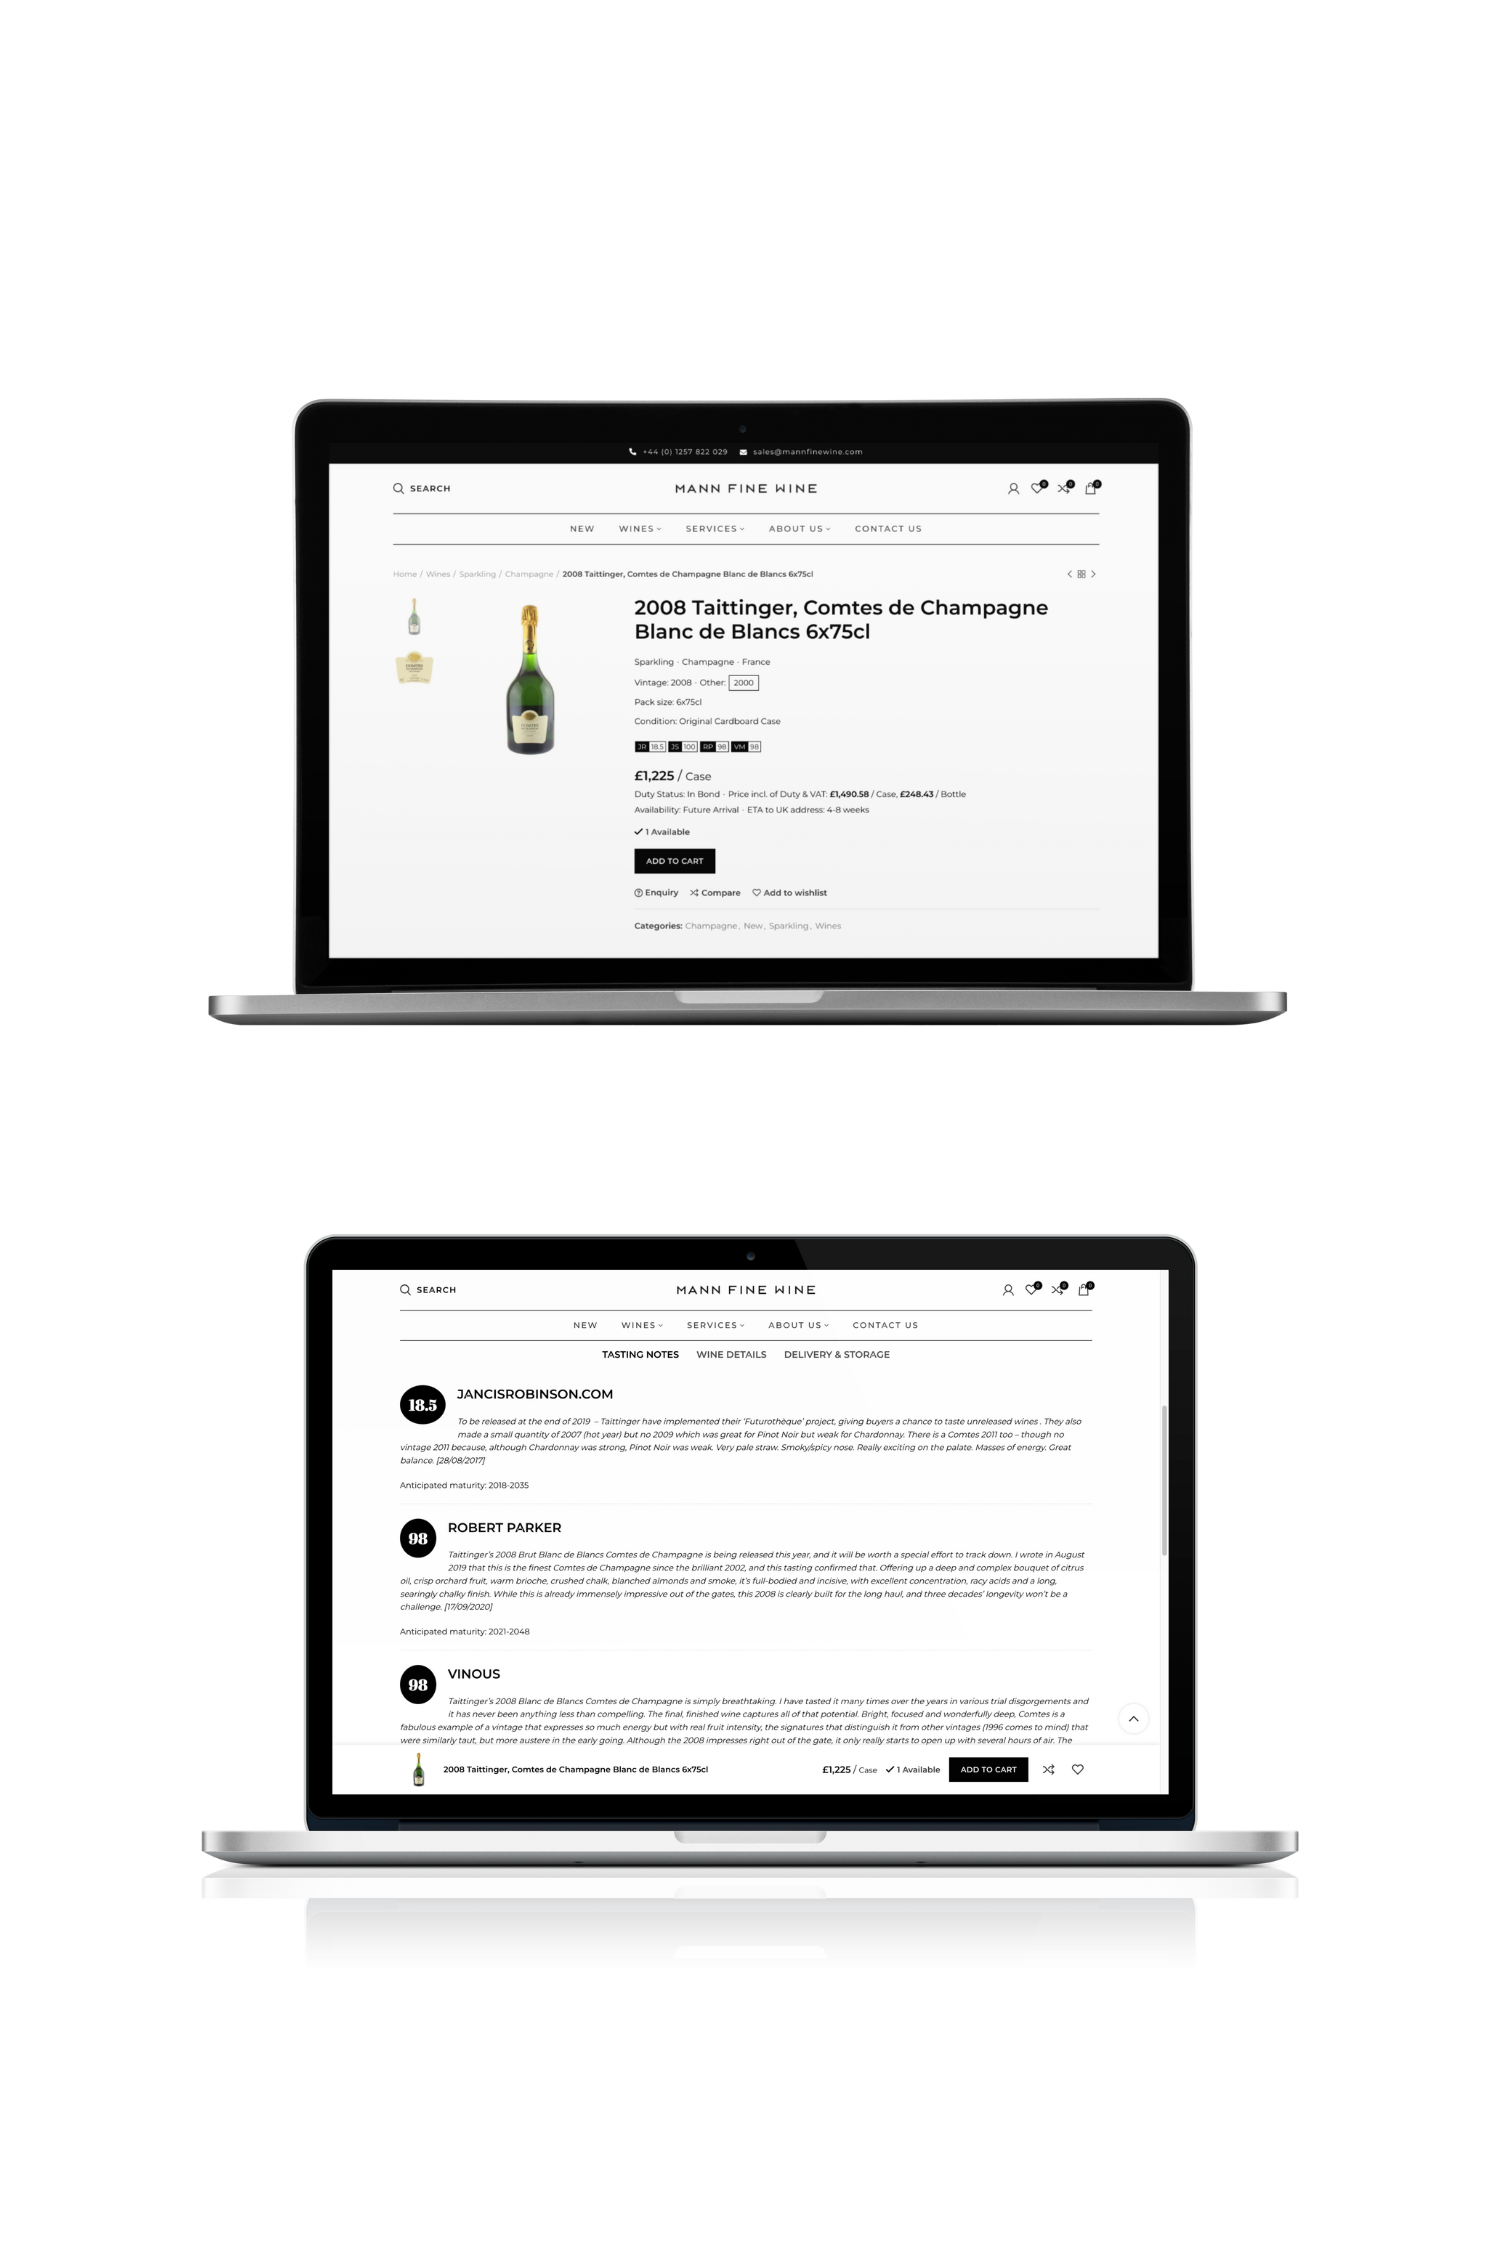 Wine ecommerce - rich content page with bottle shots, critics scores, duty status, etc. | Wine Hub | Wine business management software